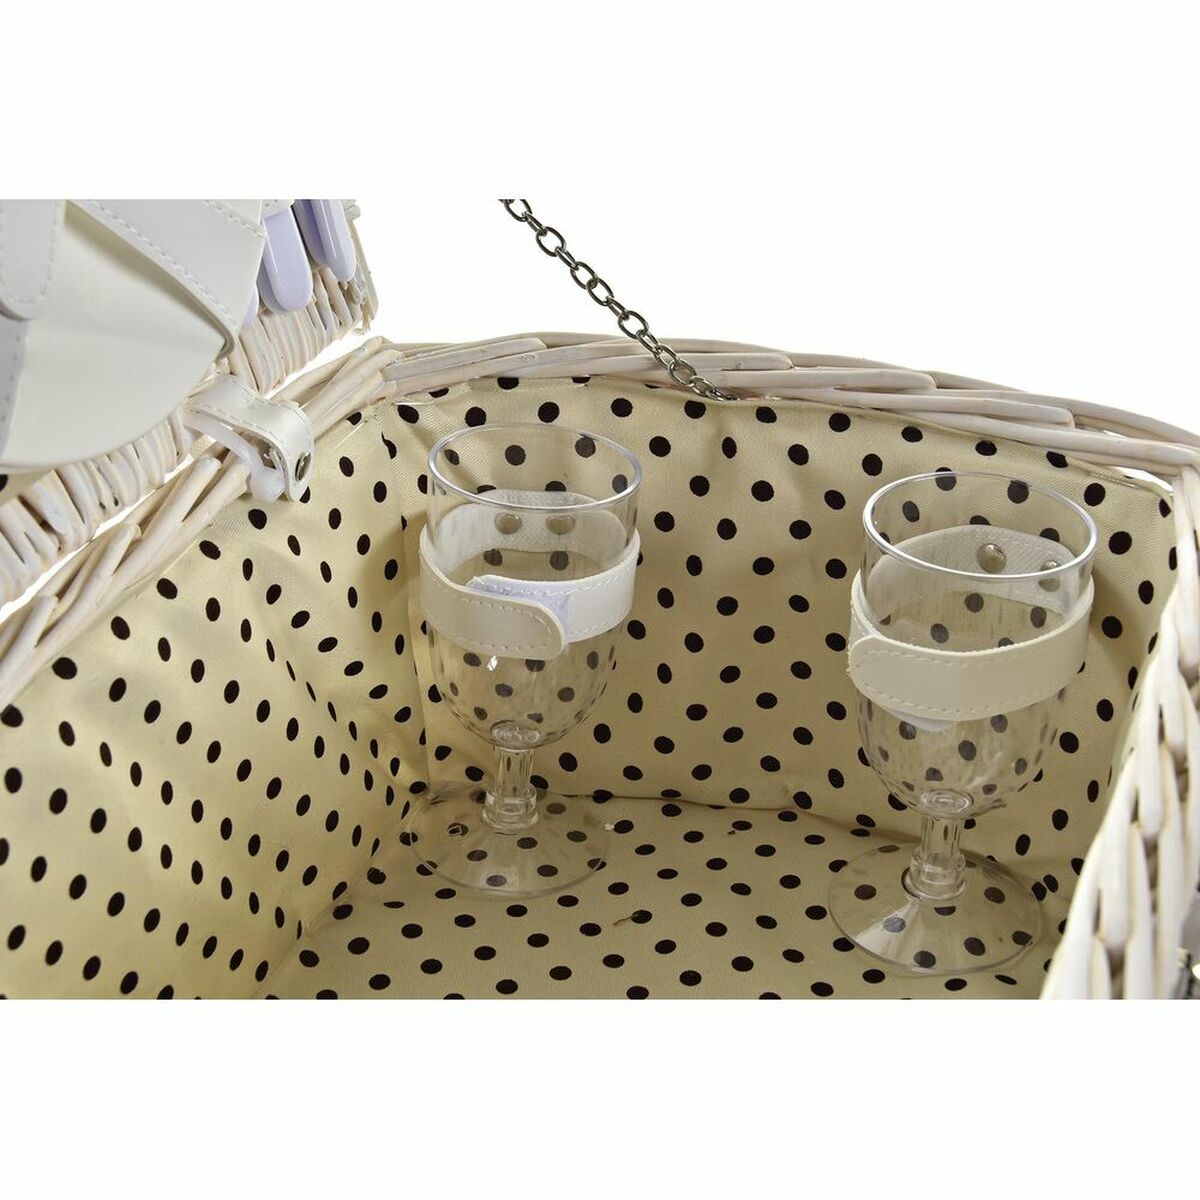 Korg dkd heminredning rotting picknick beige polyester vit (44 x 28 x